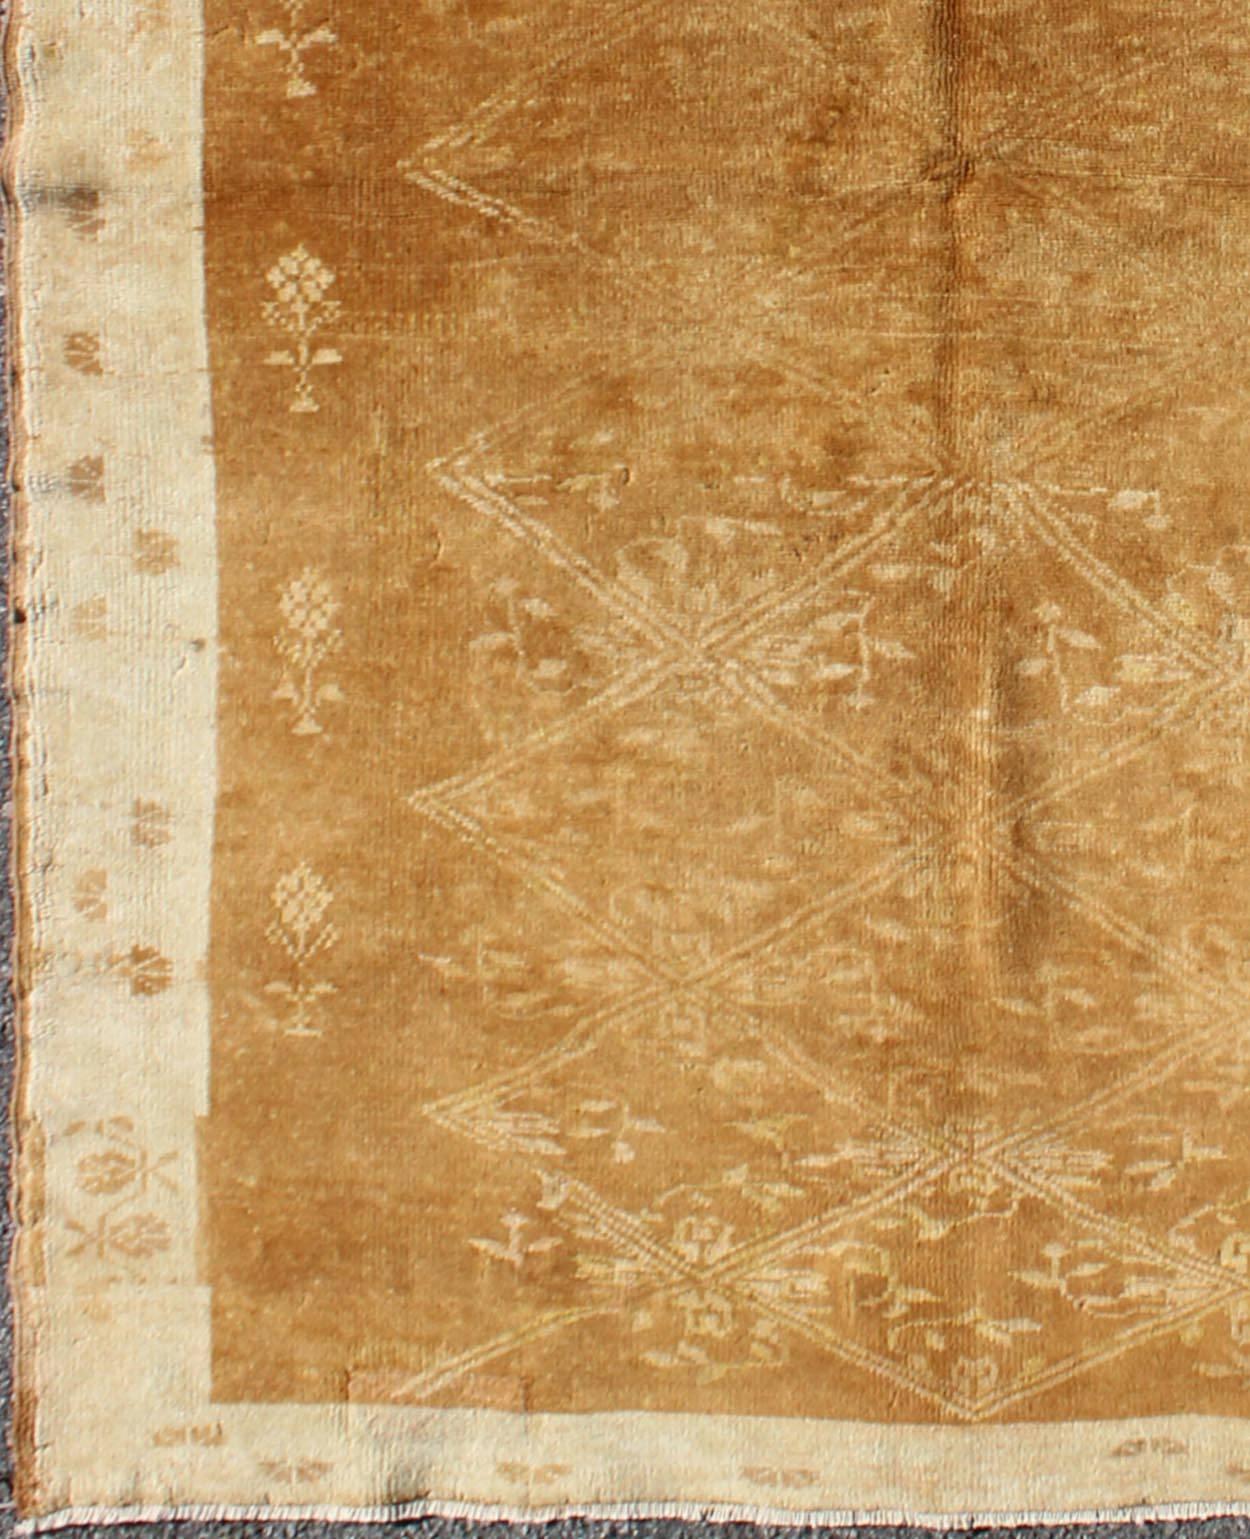 Light brown vintage Turkish Oushak rug with latticework floral pattern, rug tu-9501, country of origin / type: Turkey / Oushak, circa mid-20th century

Set on a light brown field with a latticework floral pattern, this beautiful vintage Oushak rug